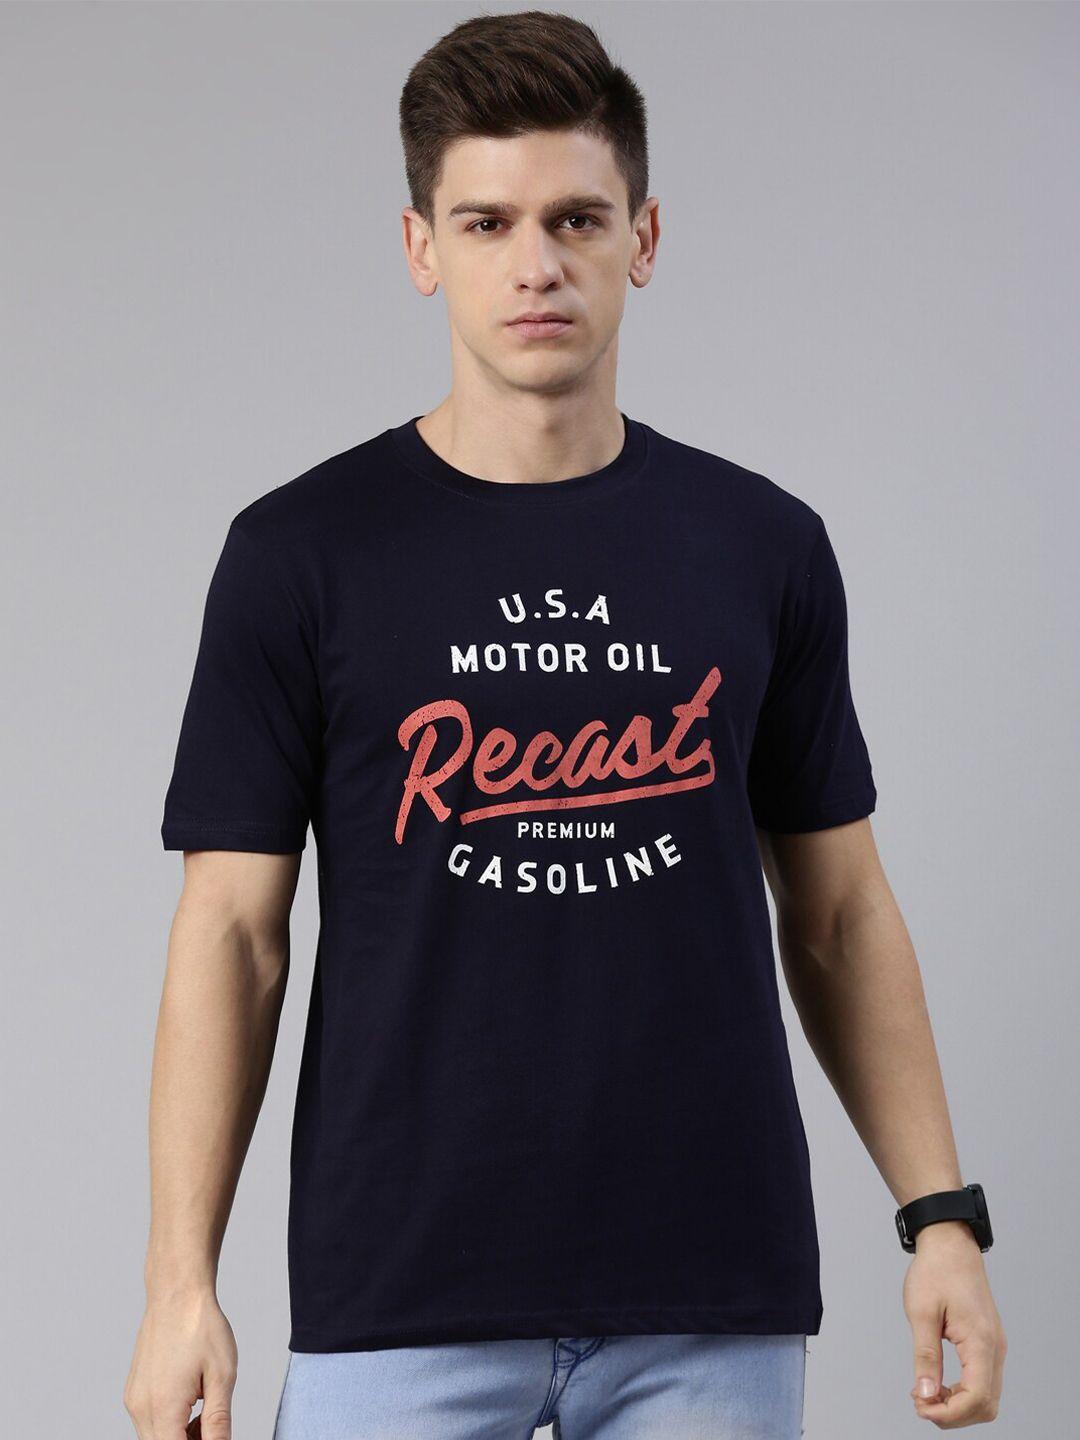 recast men navy blue typography printed pure cotton t-shirt